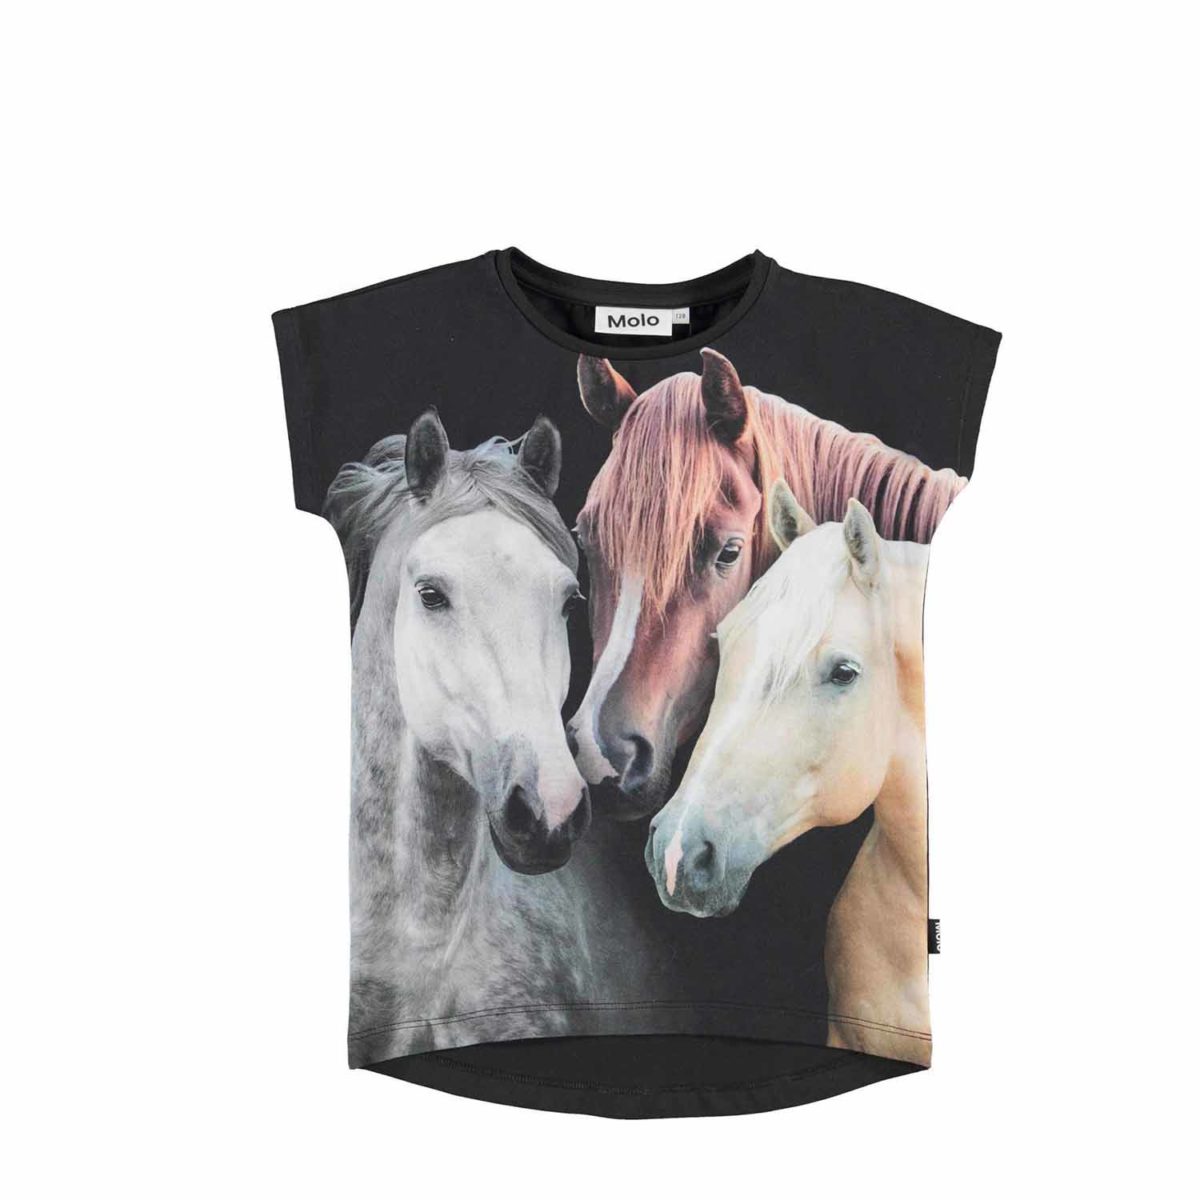 Molo - T-shirt med heste, sort